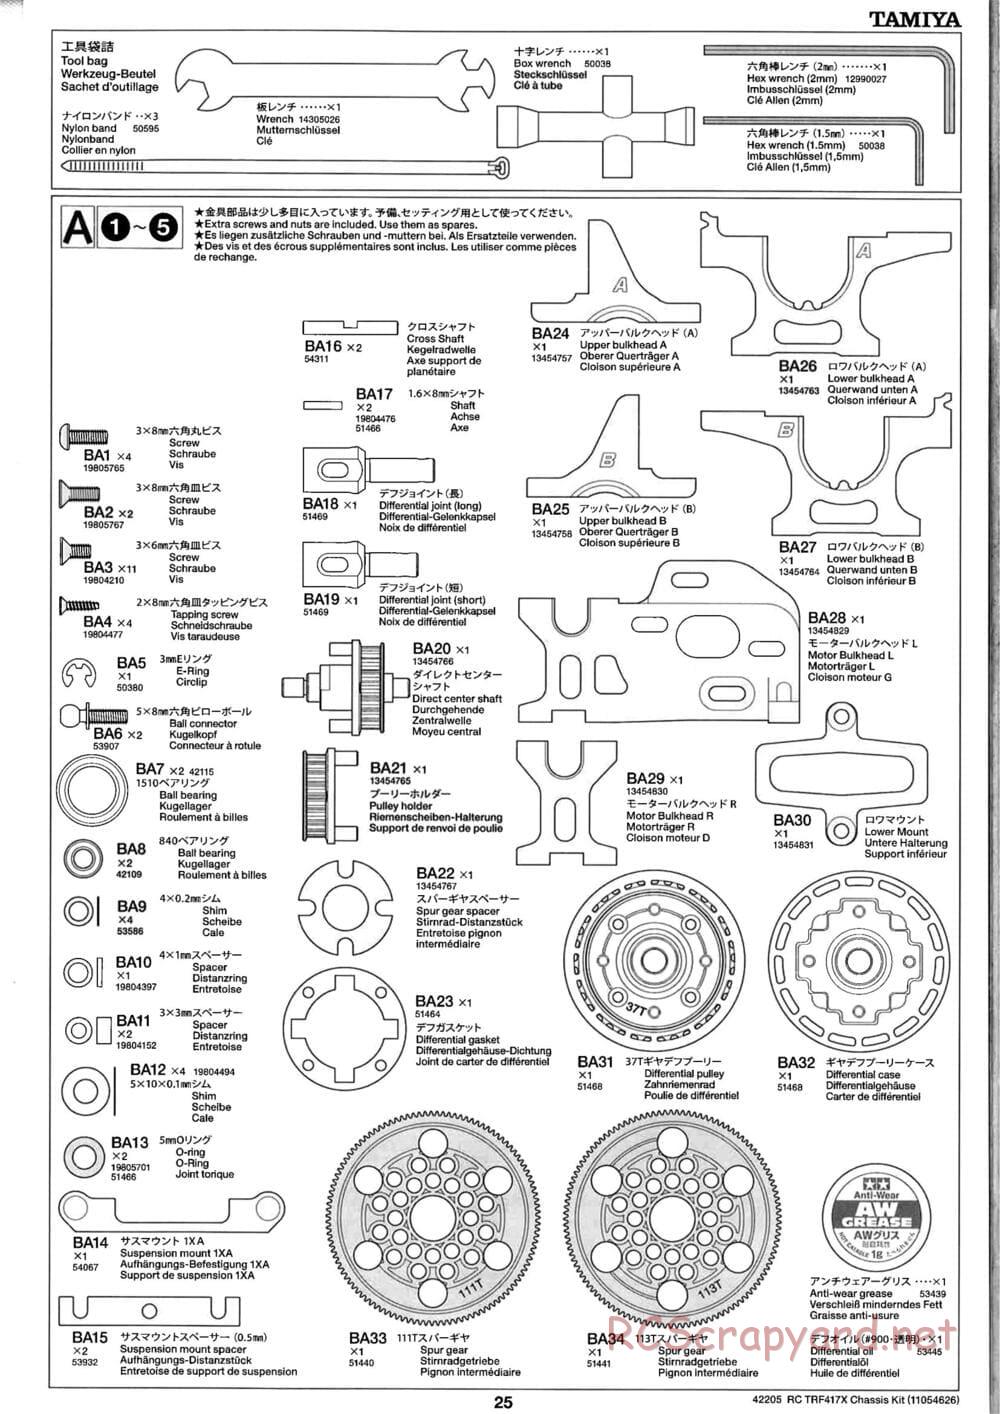 Tamiya - TRF417X Chassis - Manual - Page 25